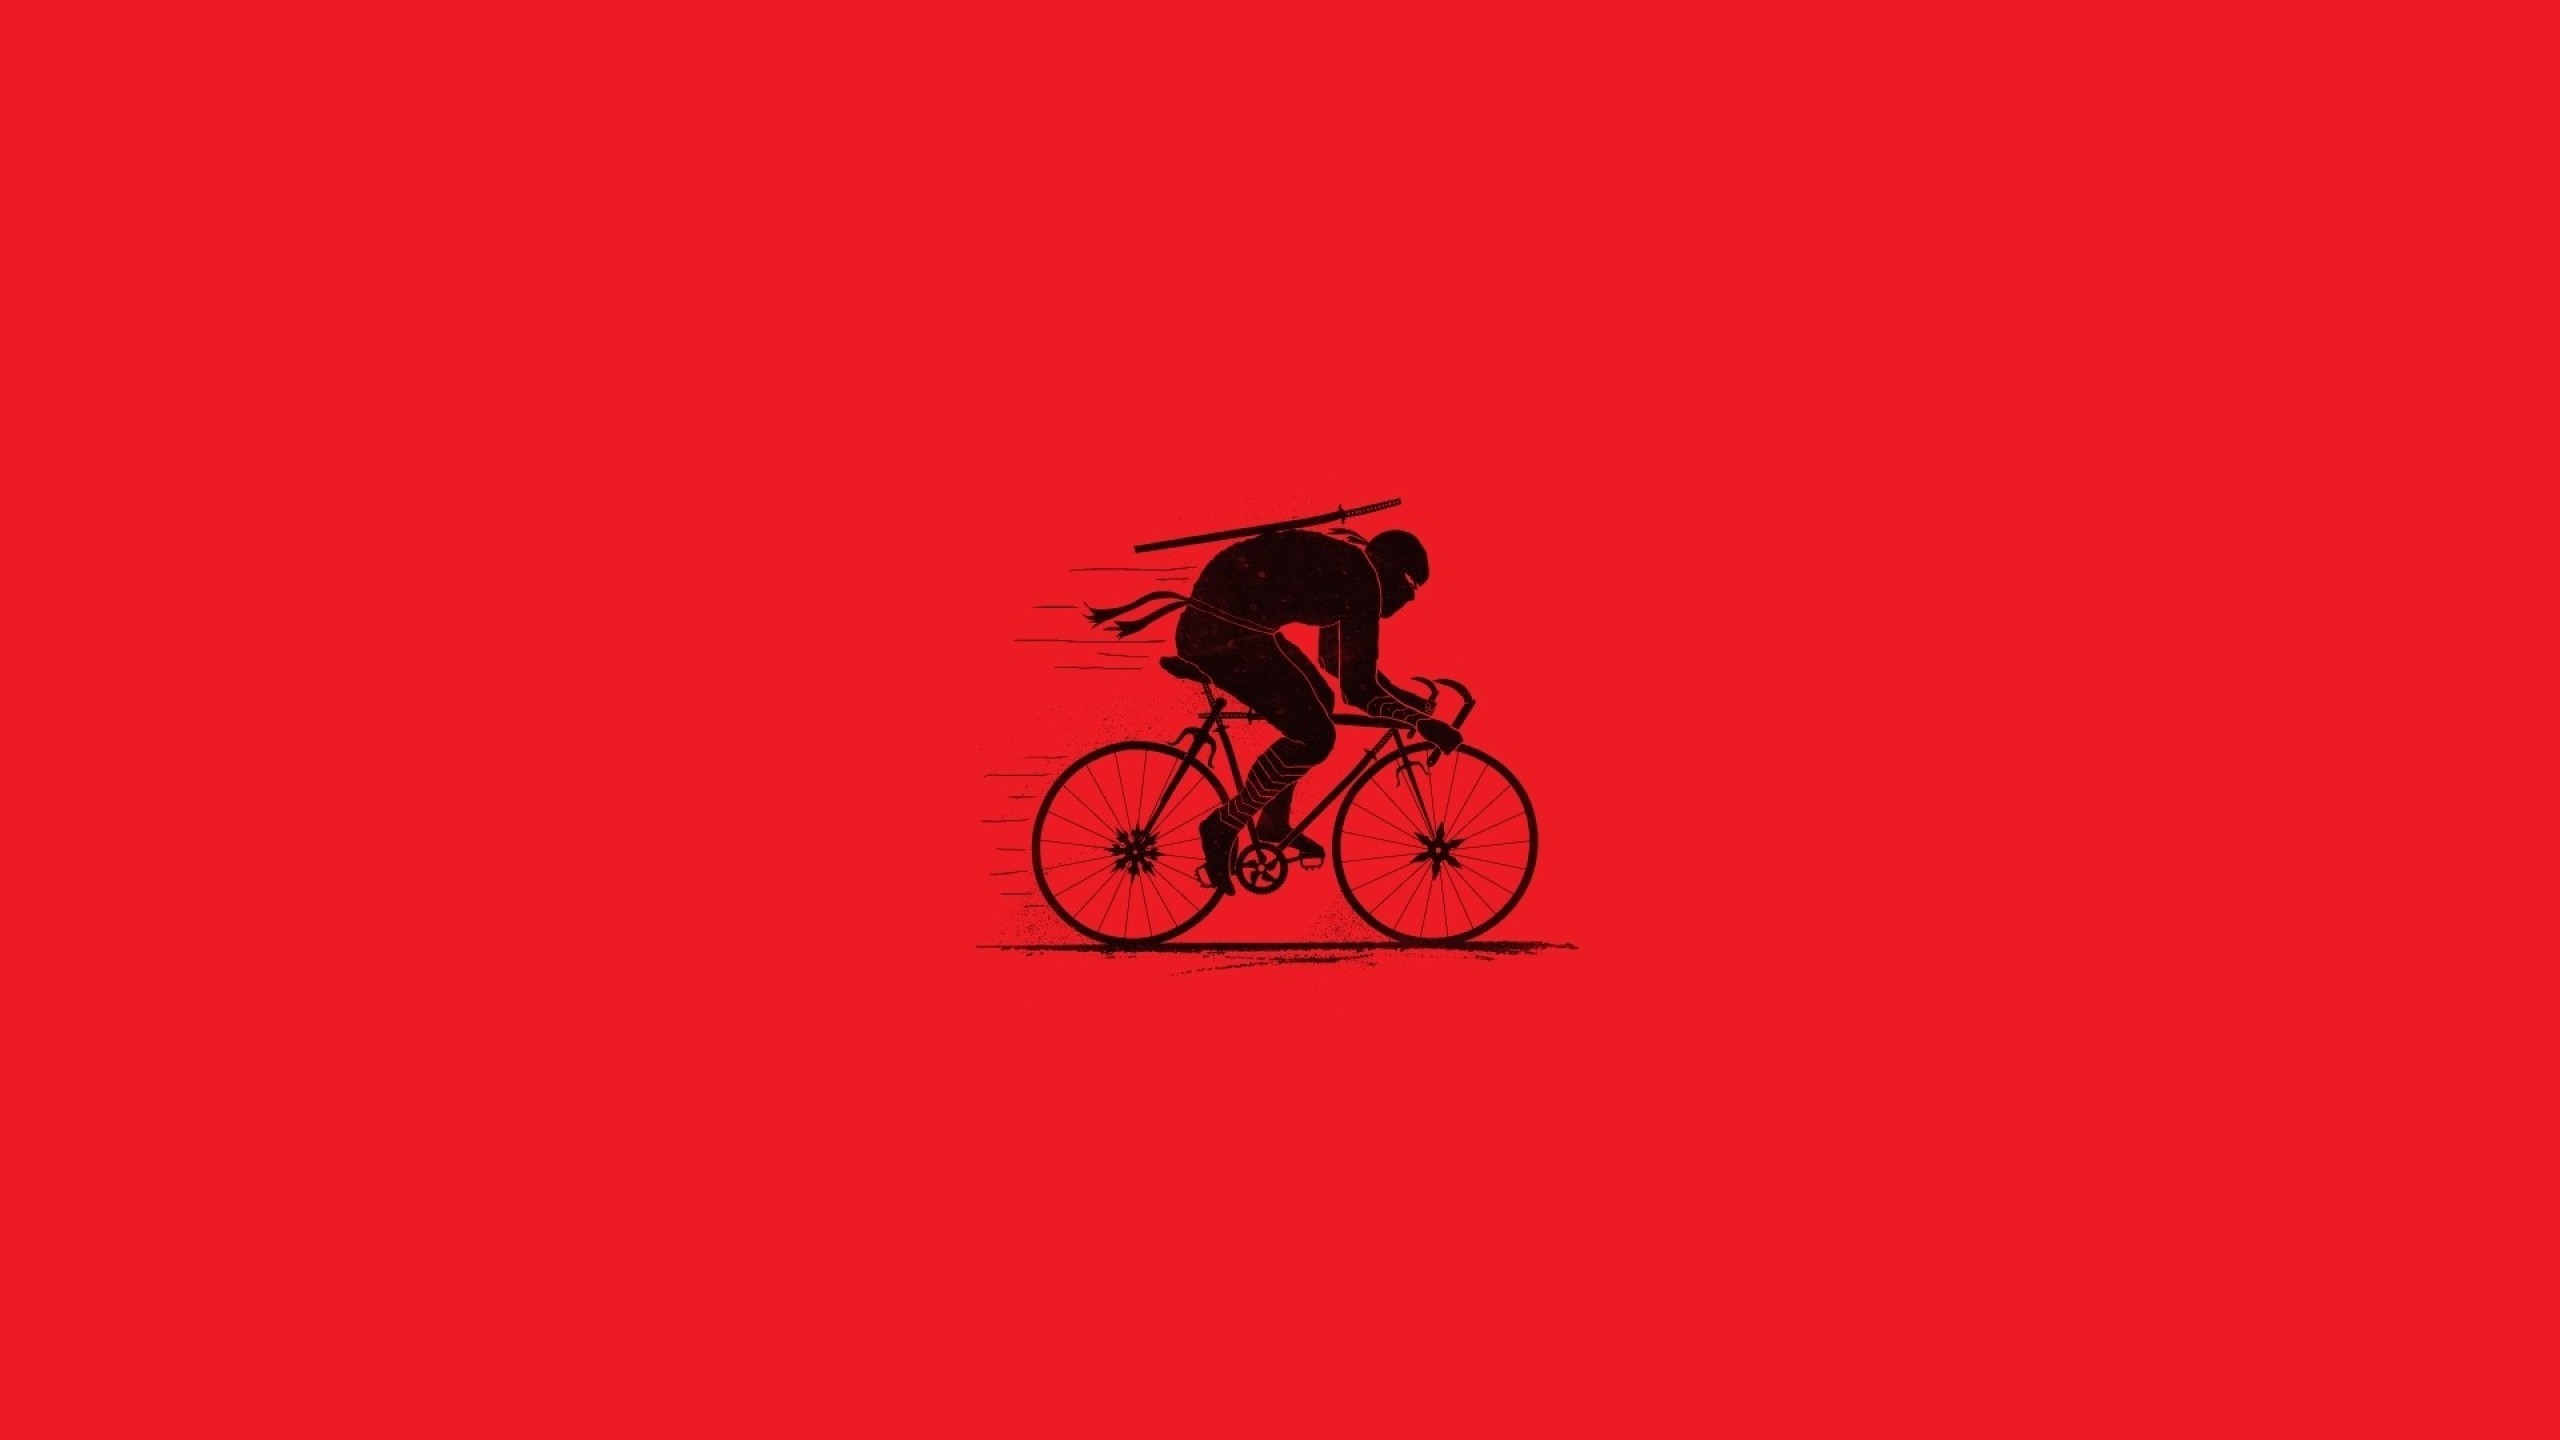 2560x1440 Ninja-rider-on-bike-high-definition